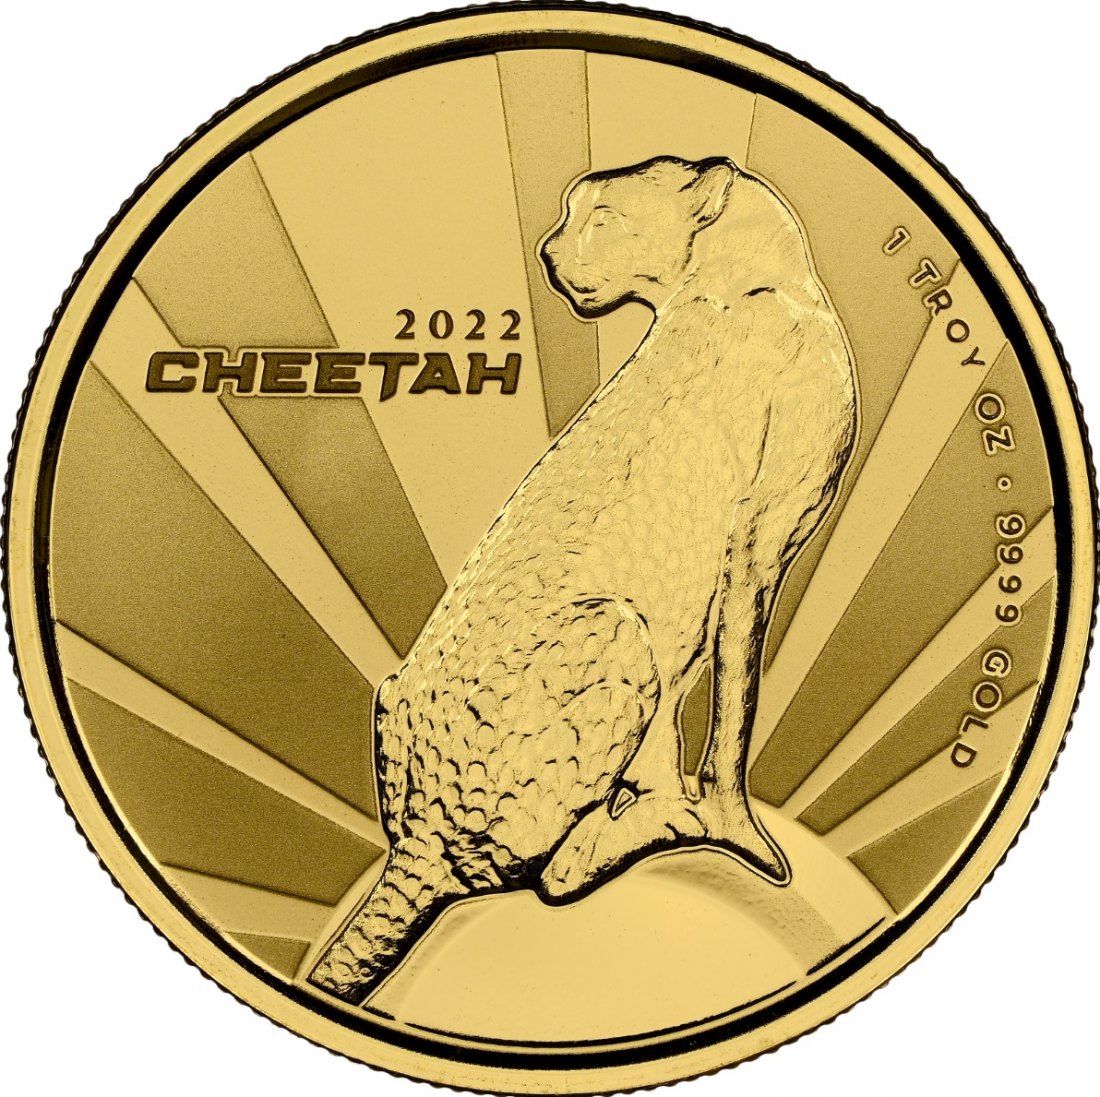  Kamerun 3000 Francs 2022 | NGC PF70 TOP POP Proof | Cheetah (Gepard)   